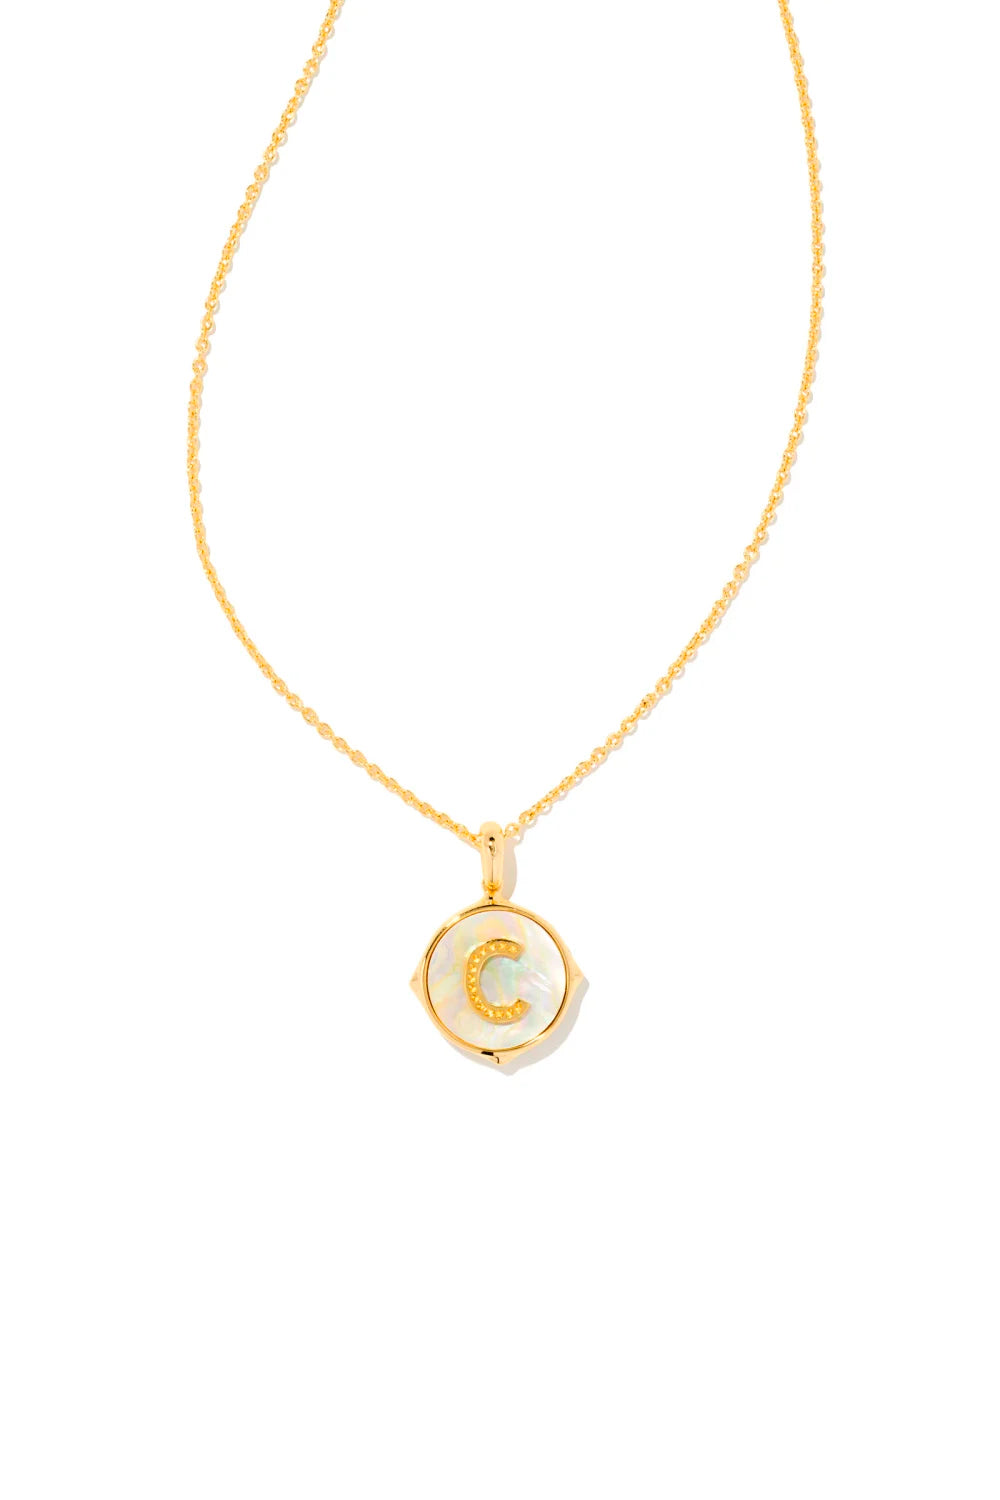 Kendra Scott: Letter C Gold Disk Pendant Necklace - Iridescent Abalone | Makk Fashions